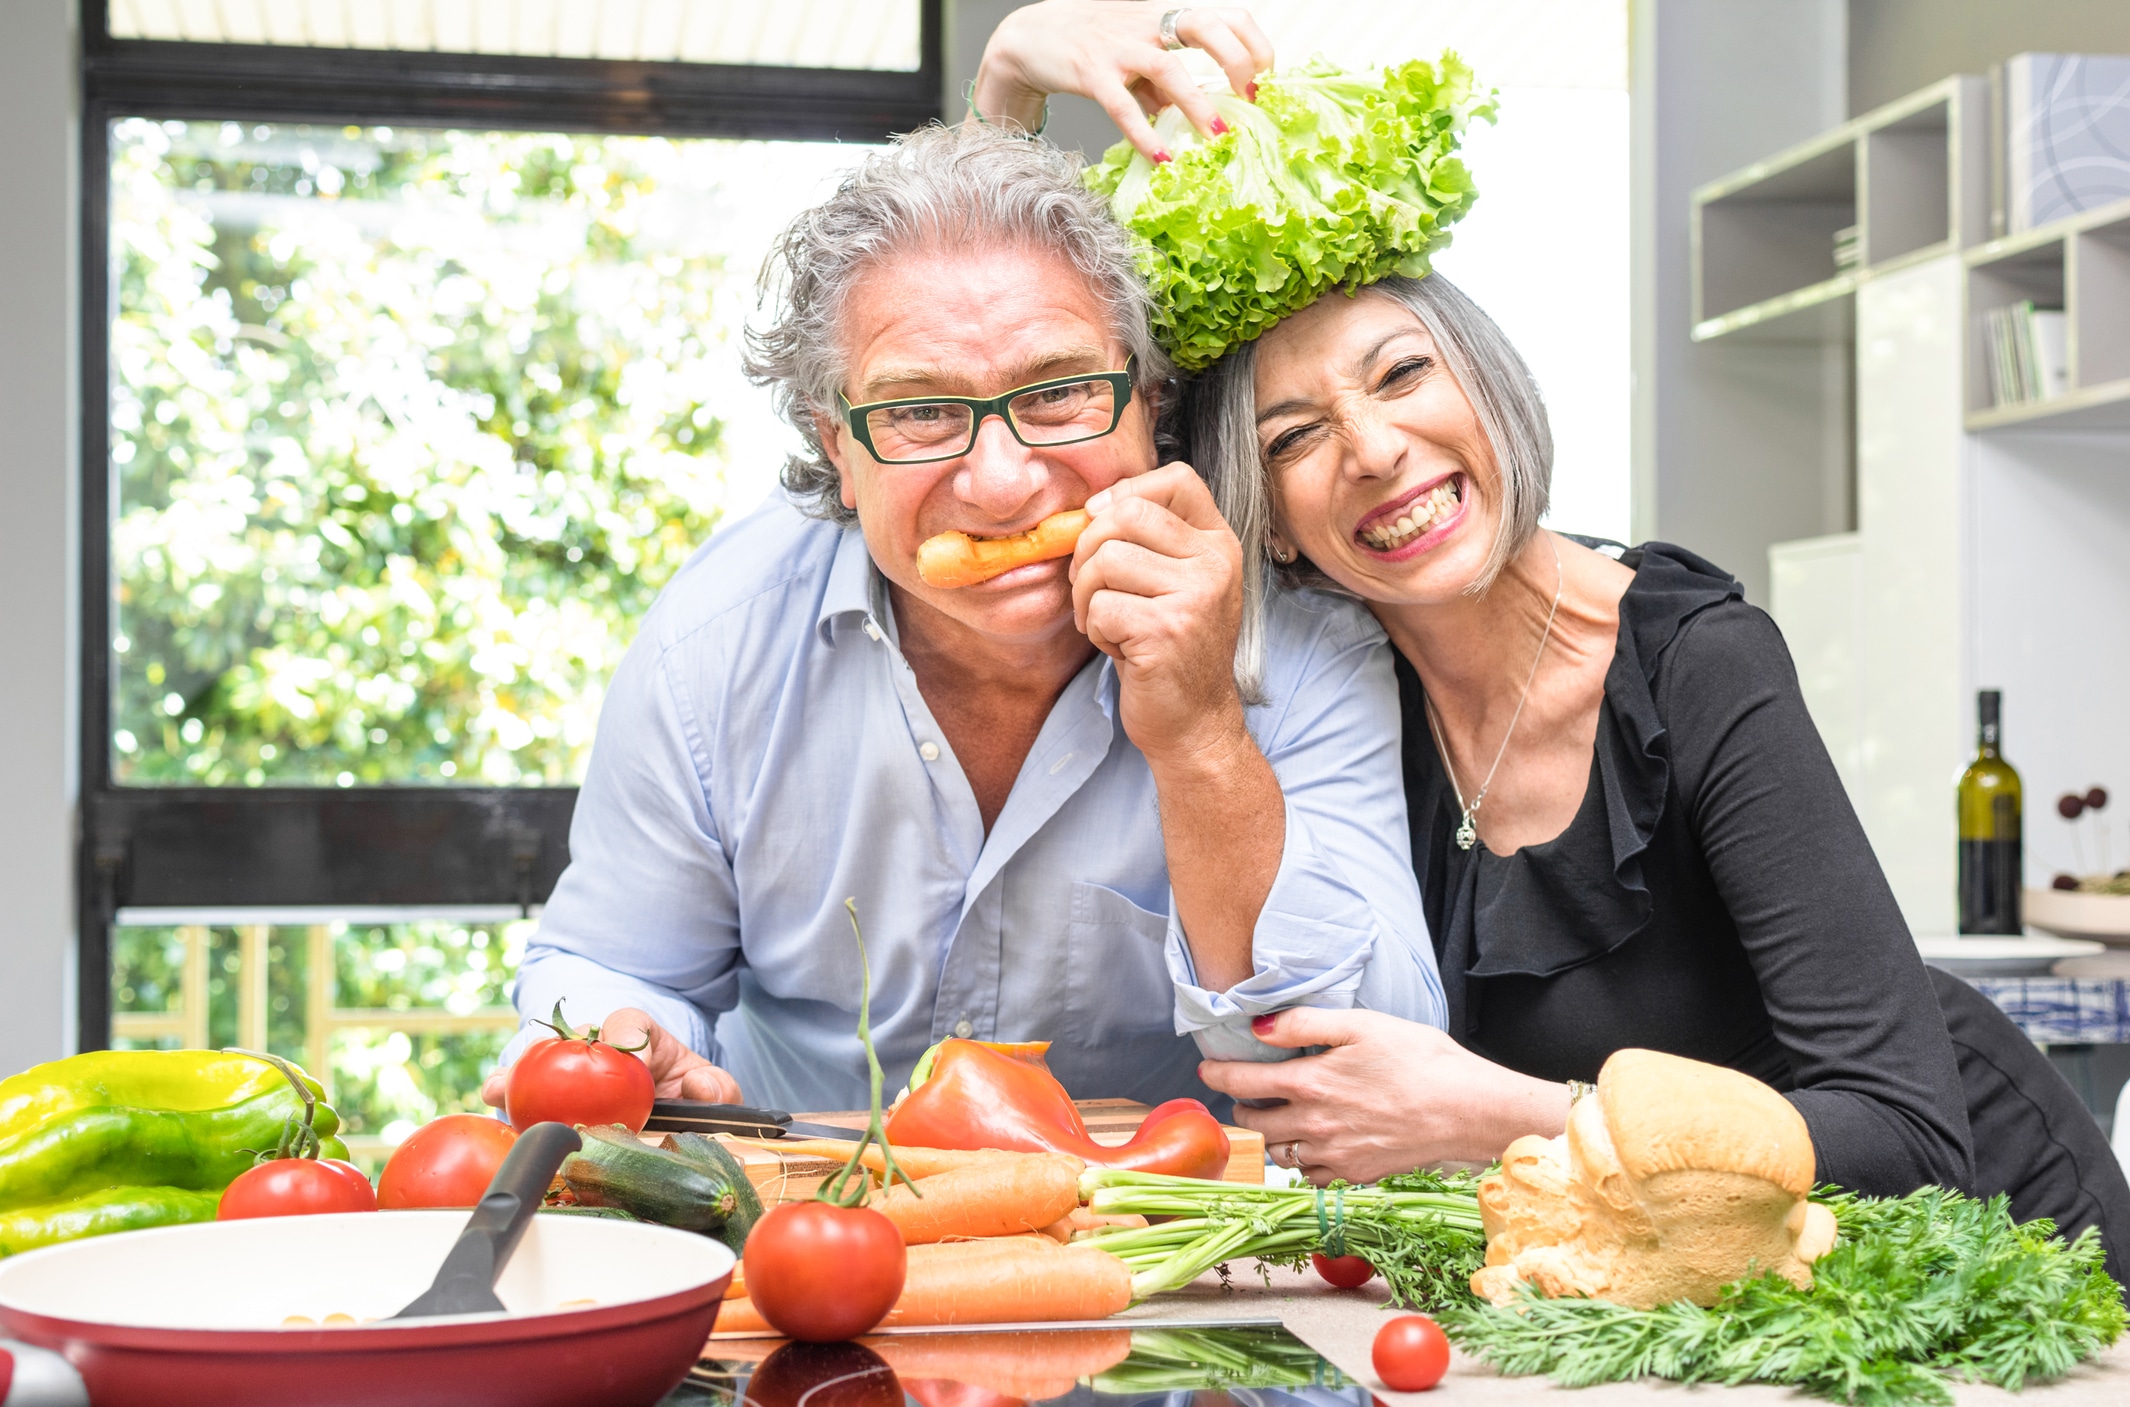 Elderly couple enjoying fresh produce in kitchen